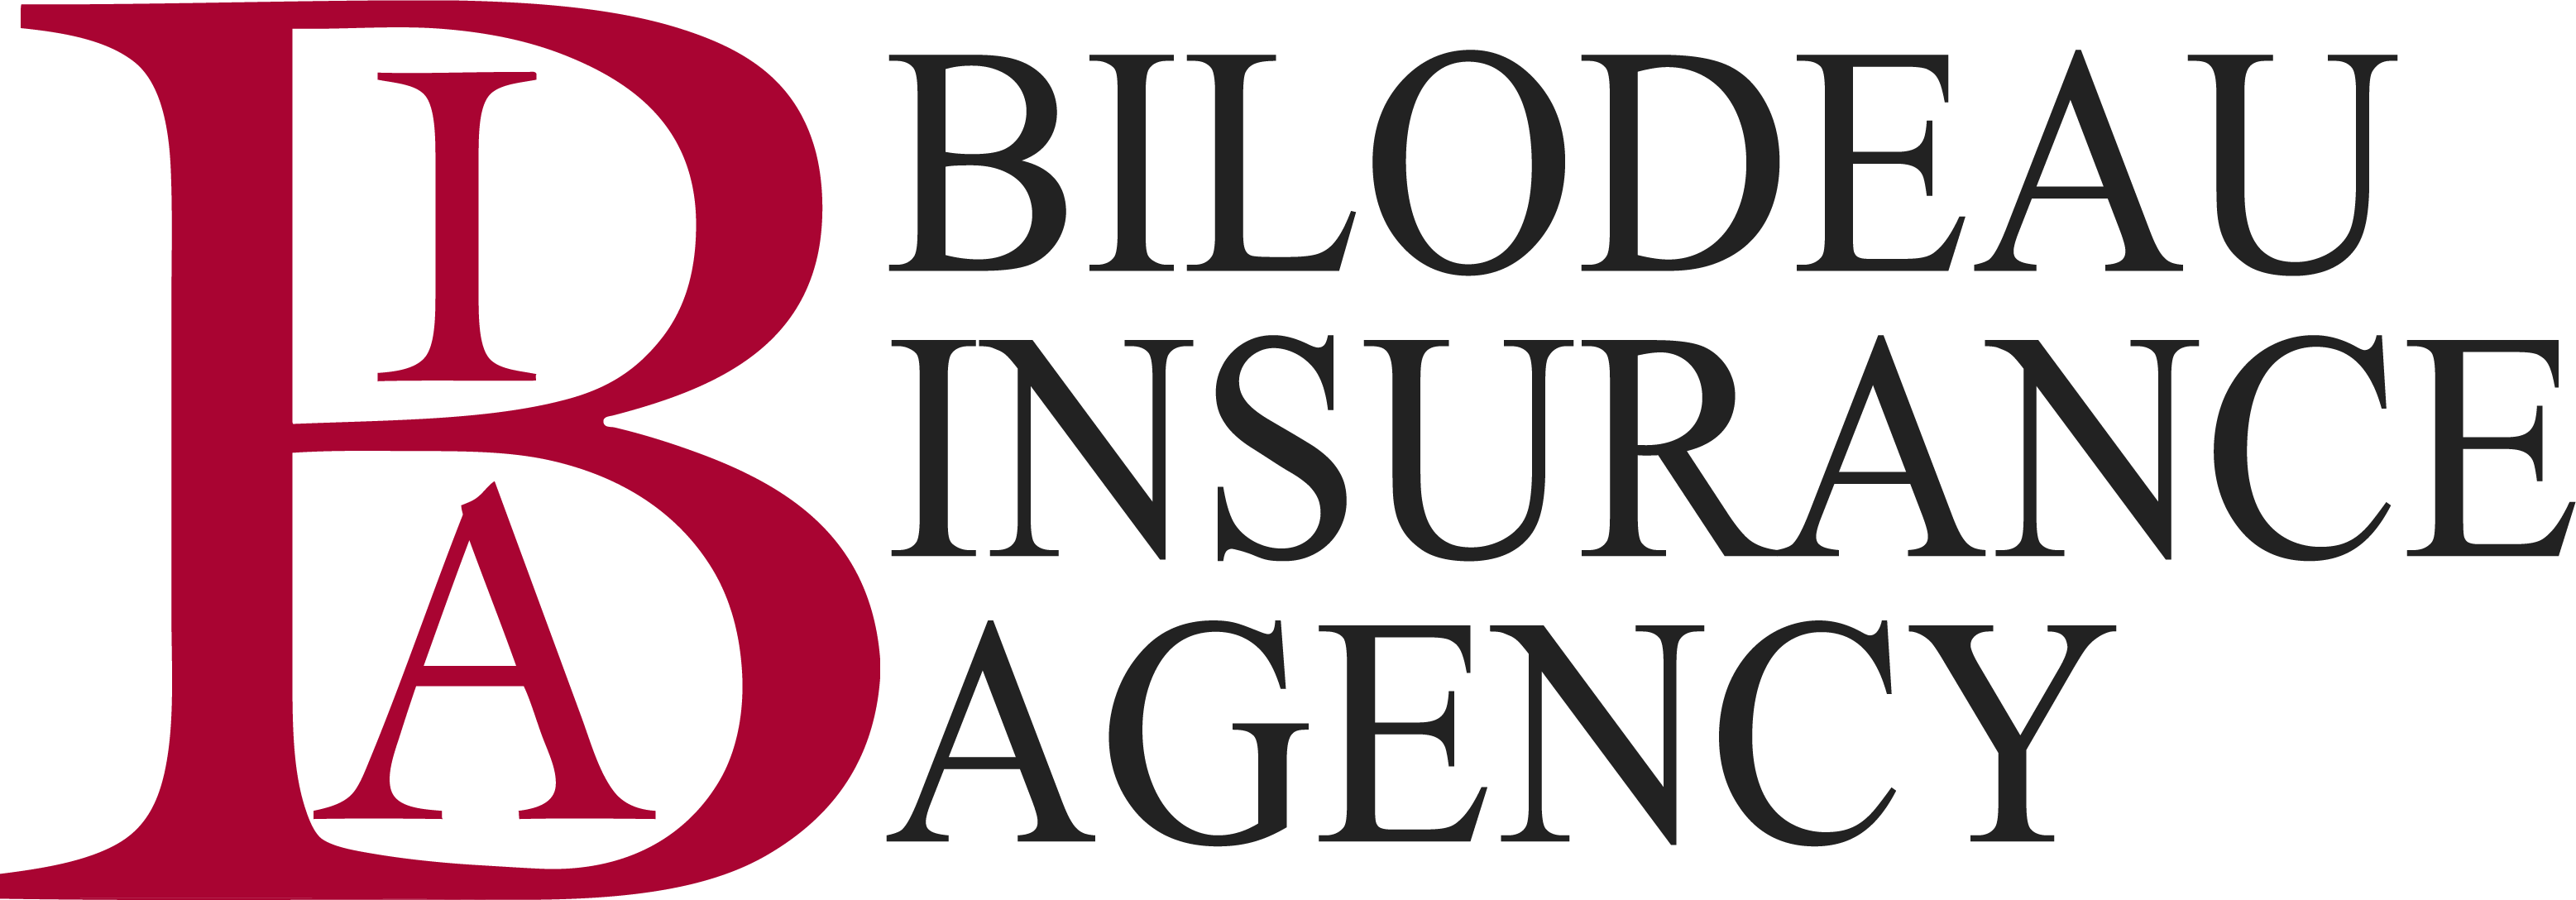 Bilodeau Insurance Agency, Inc. — Brunswick Icon